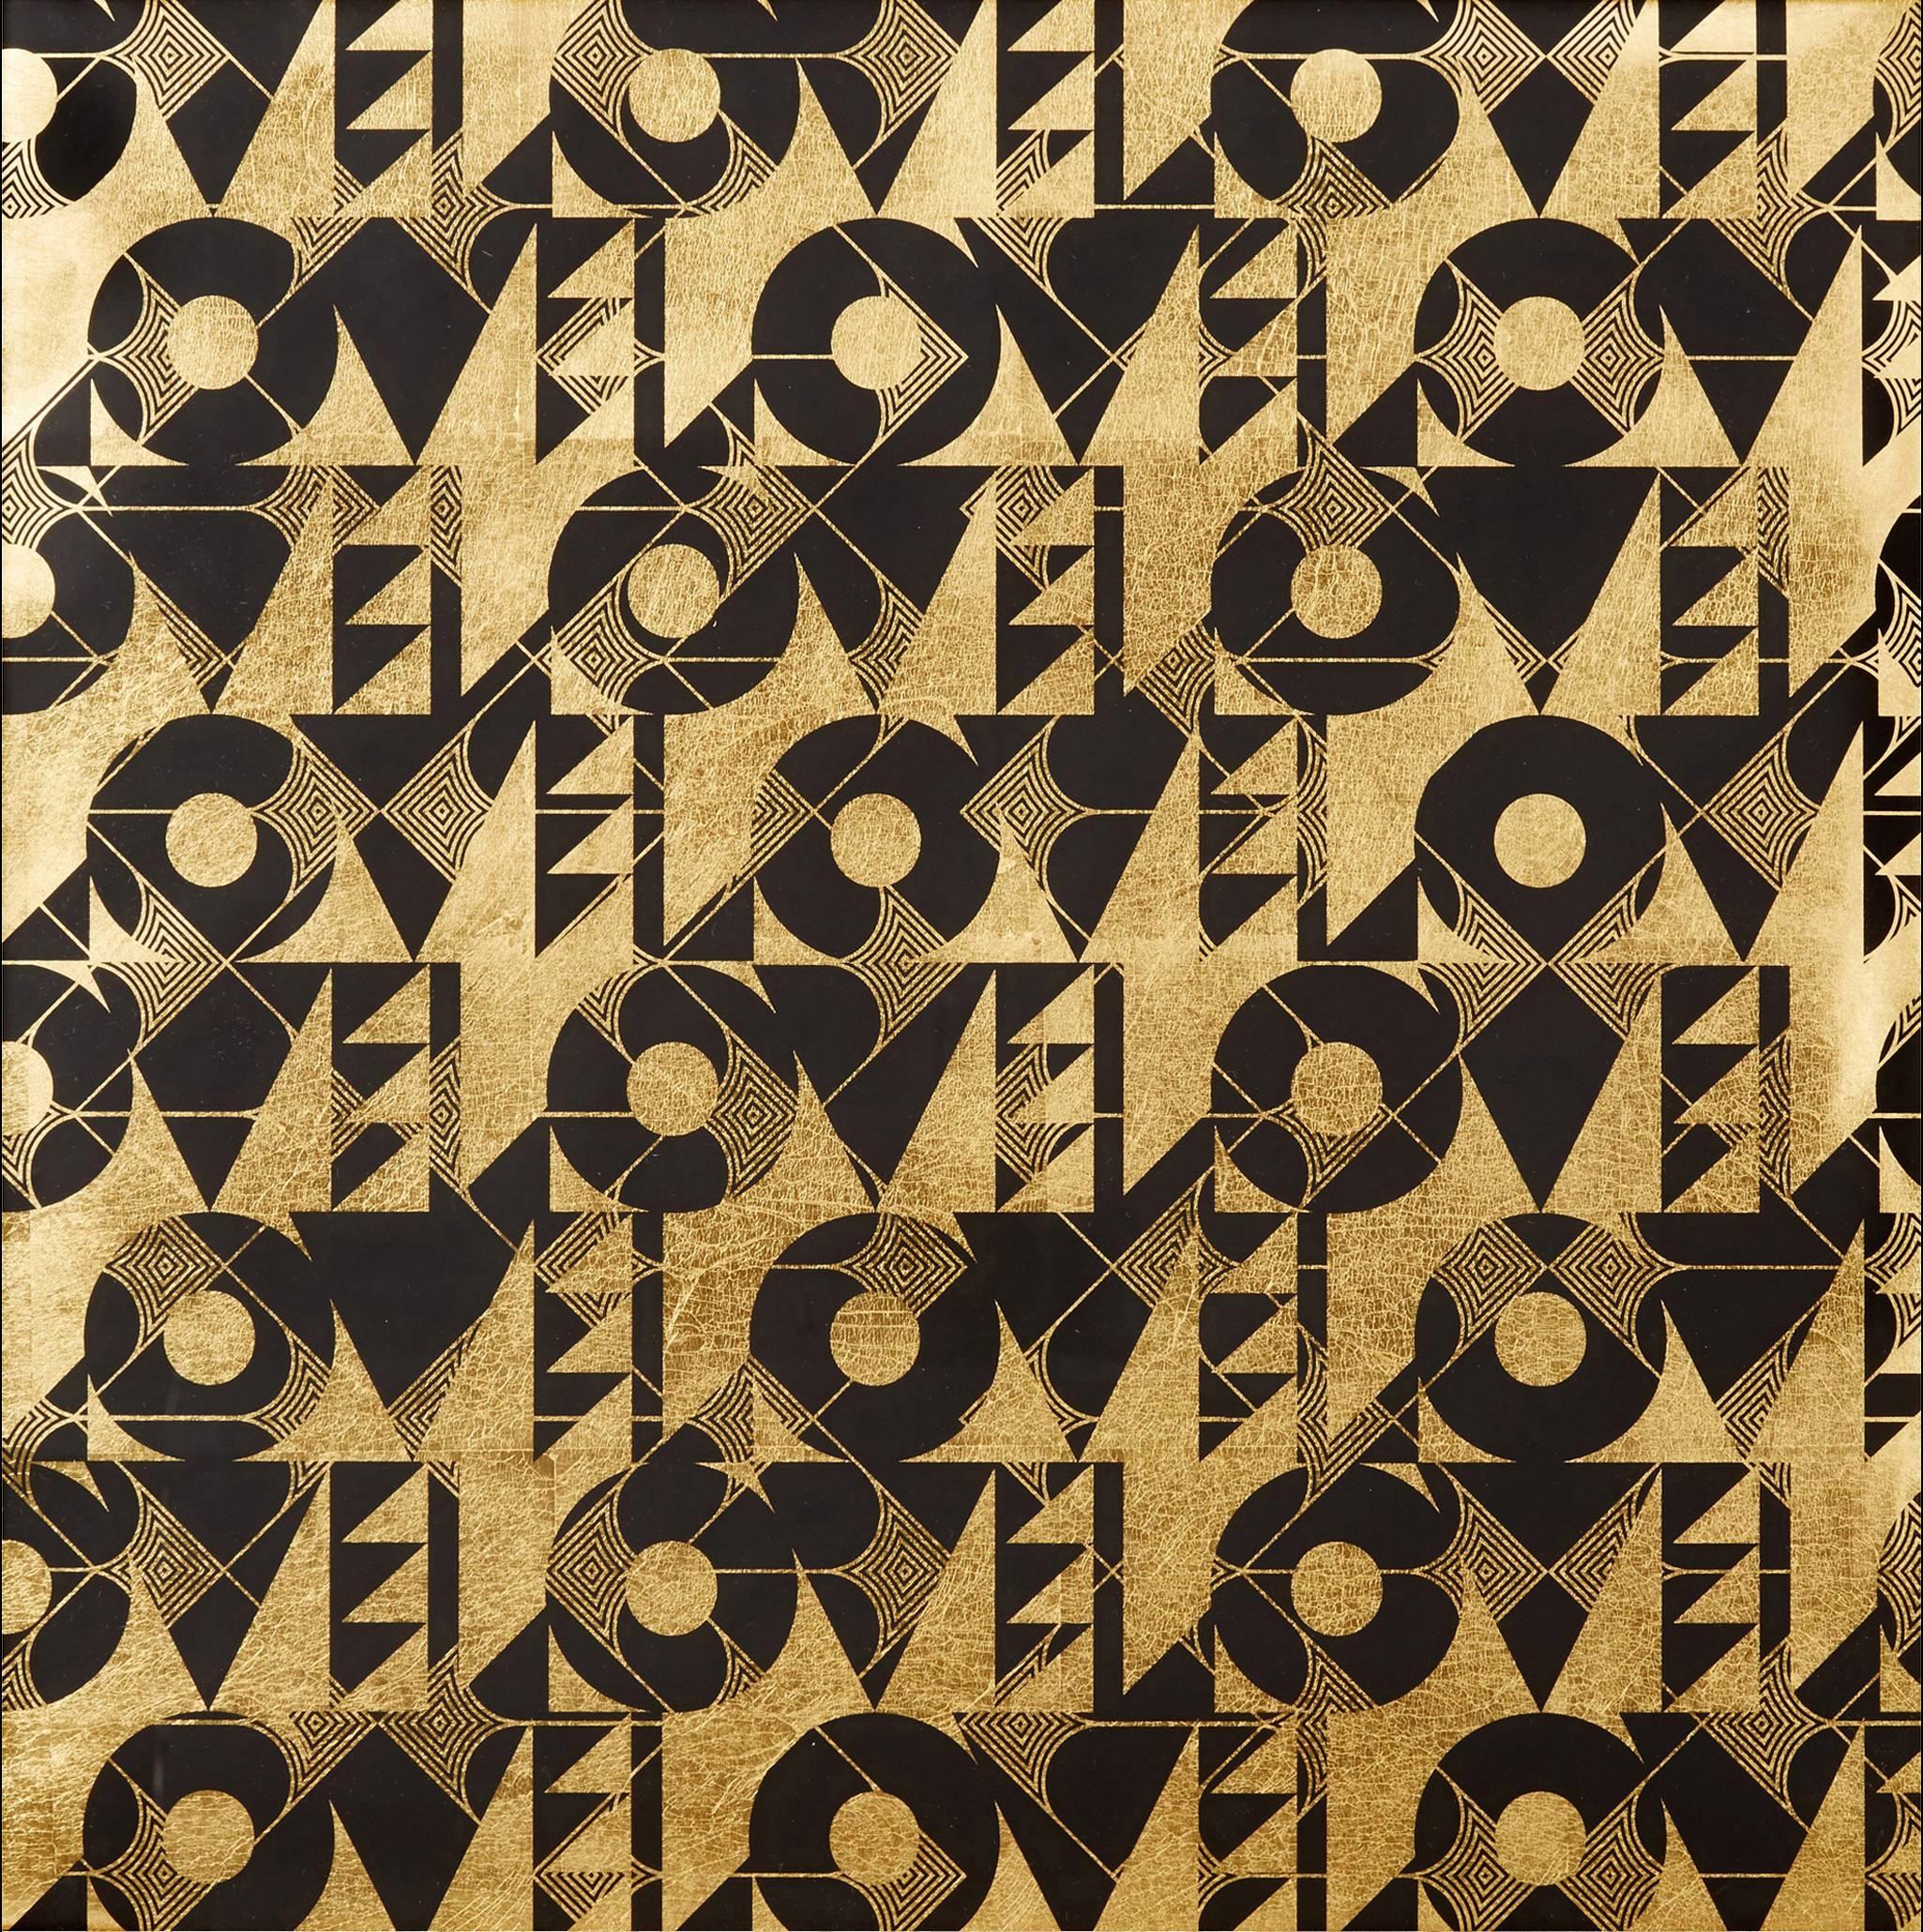 Lisa Hunt Abstract Print - Love and Arrows II (design gold black metallic work on paper Art Deco pattern)